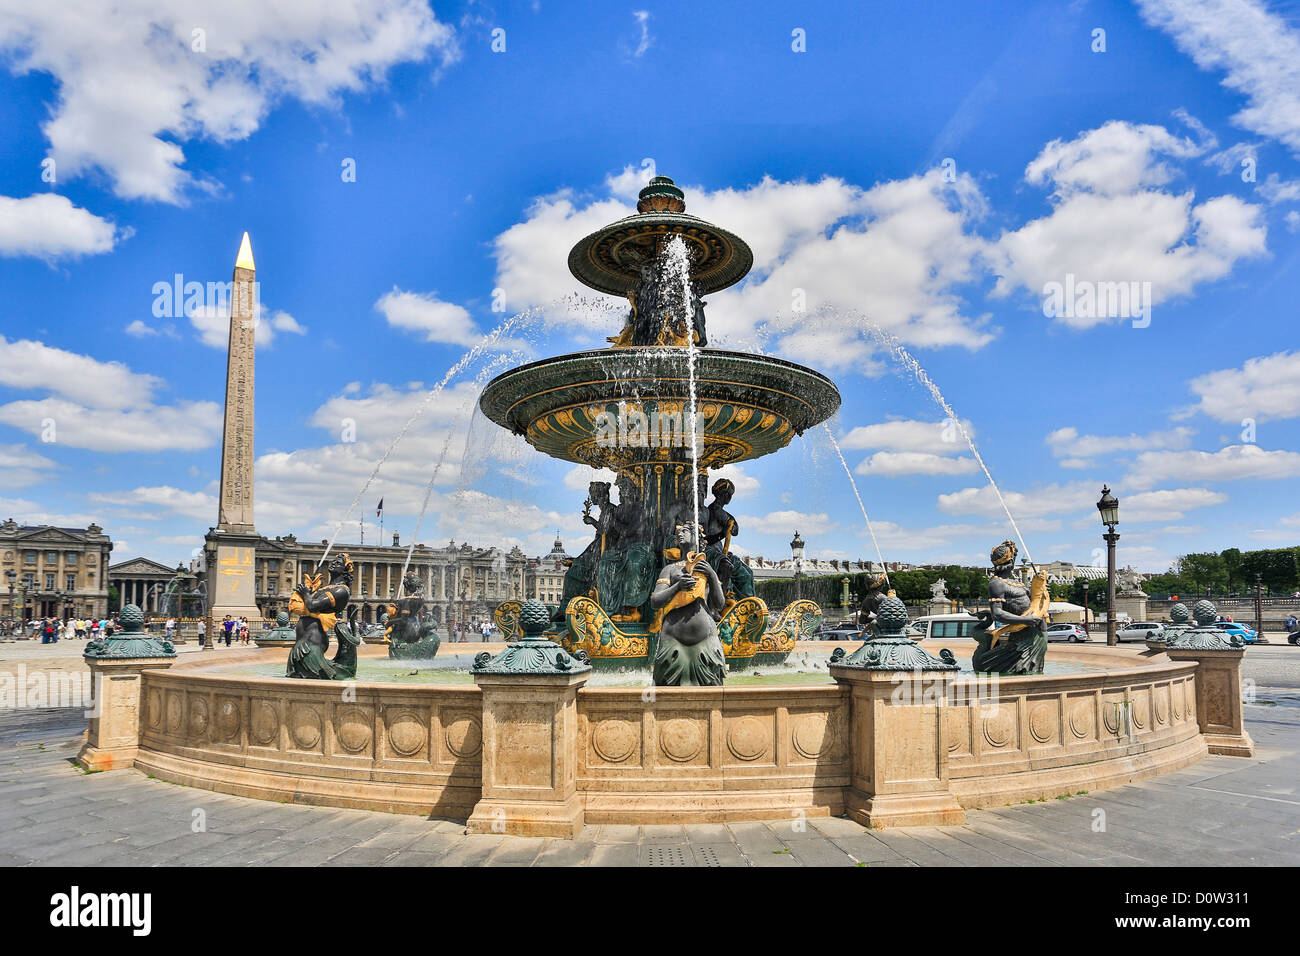 France, Europe, travel, Paris, City, Concorde, Square, Place de la Concorde, Fountain, Mars, Luxor, Obelisk, architecture, art, Stock Photo